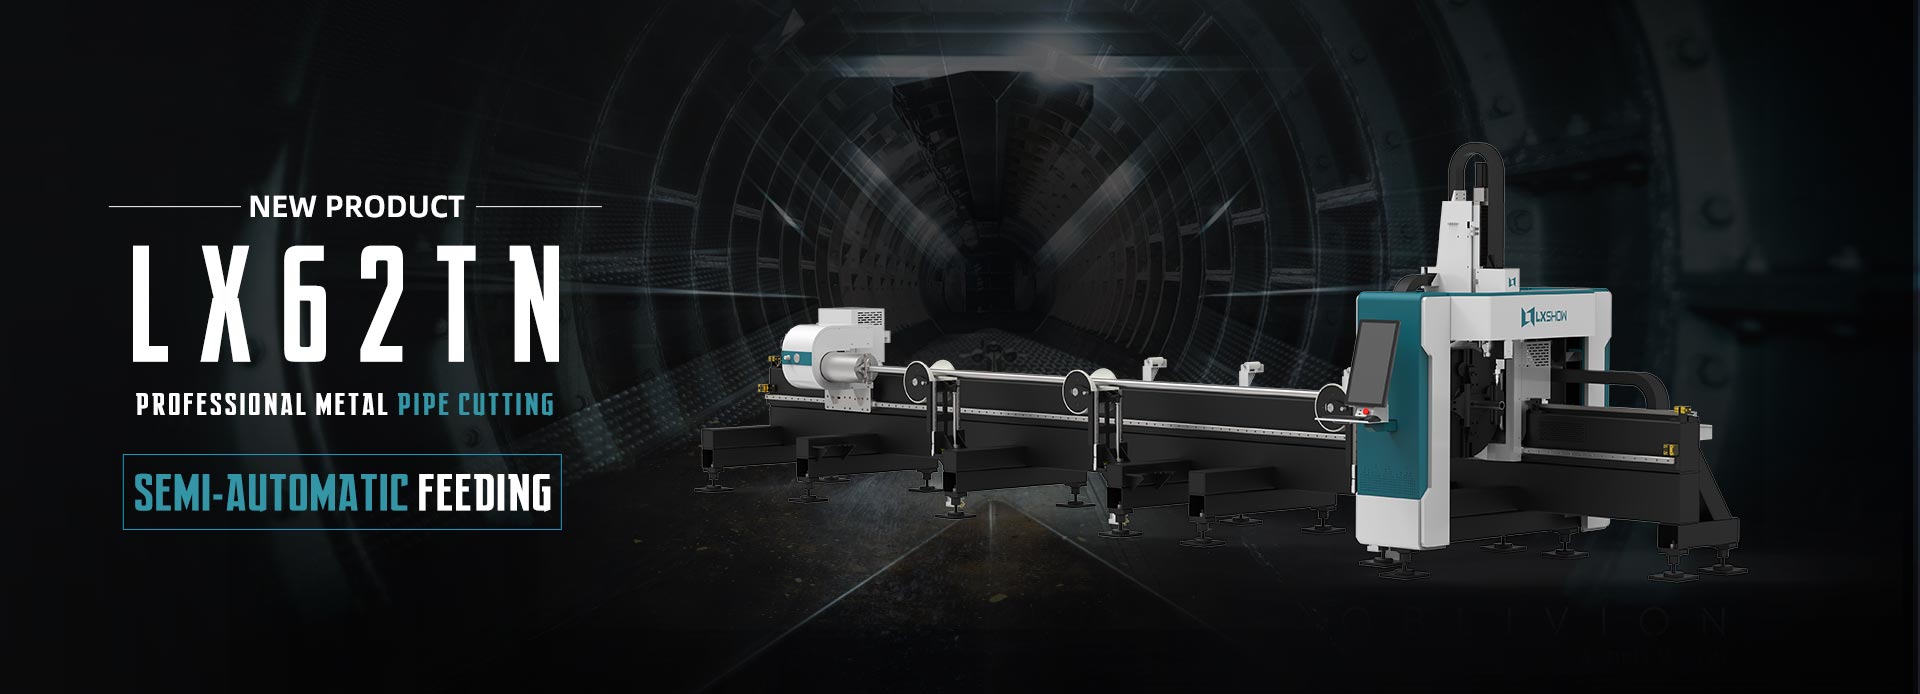 LX62TN Semi Automatic Feeding Fiber Laser Mtal Tube Cutting Machine